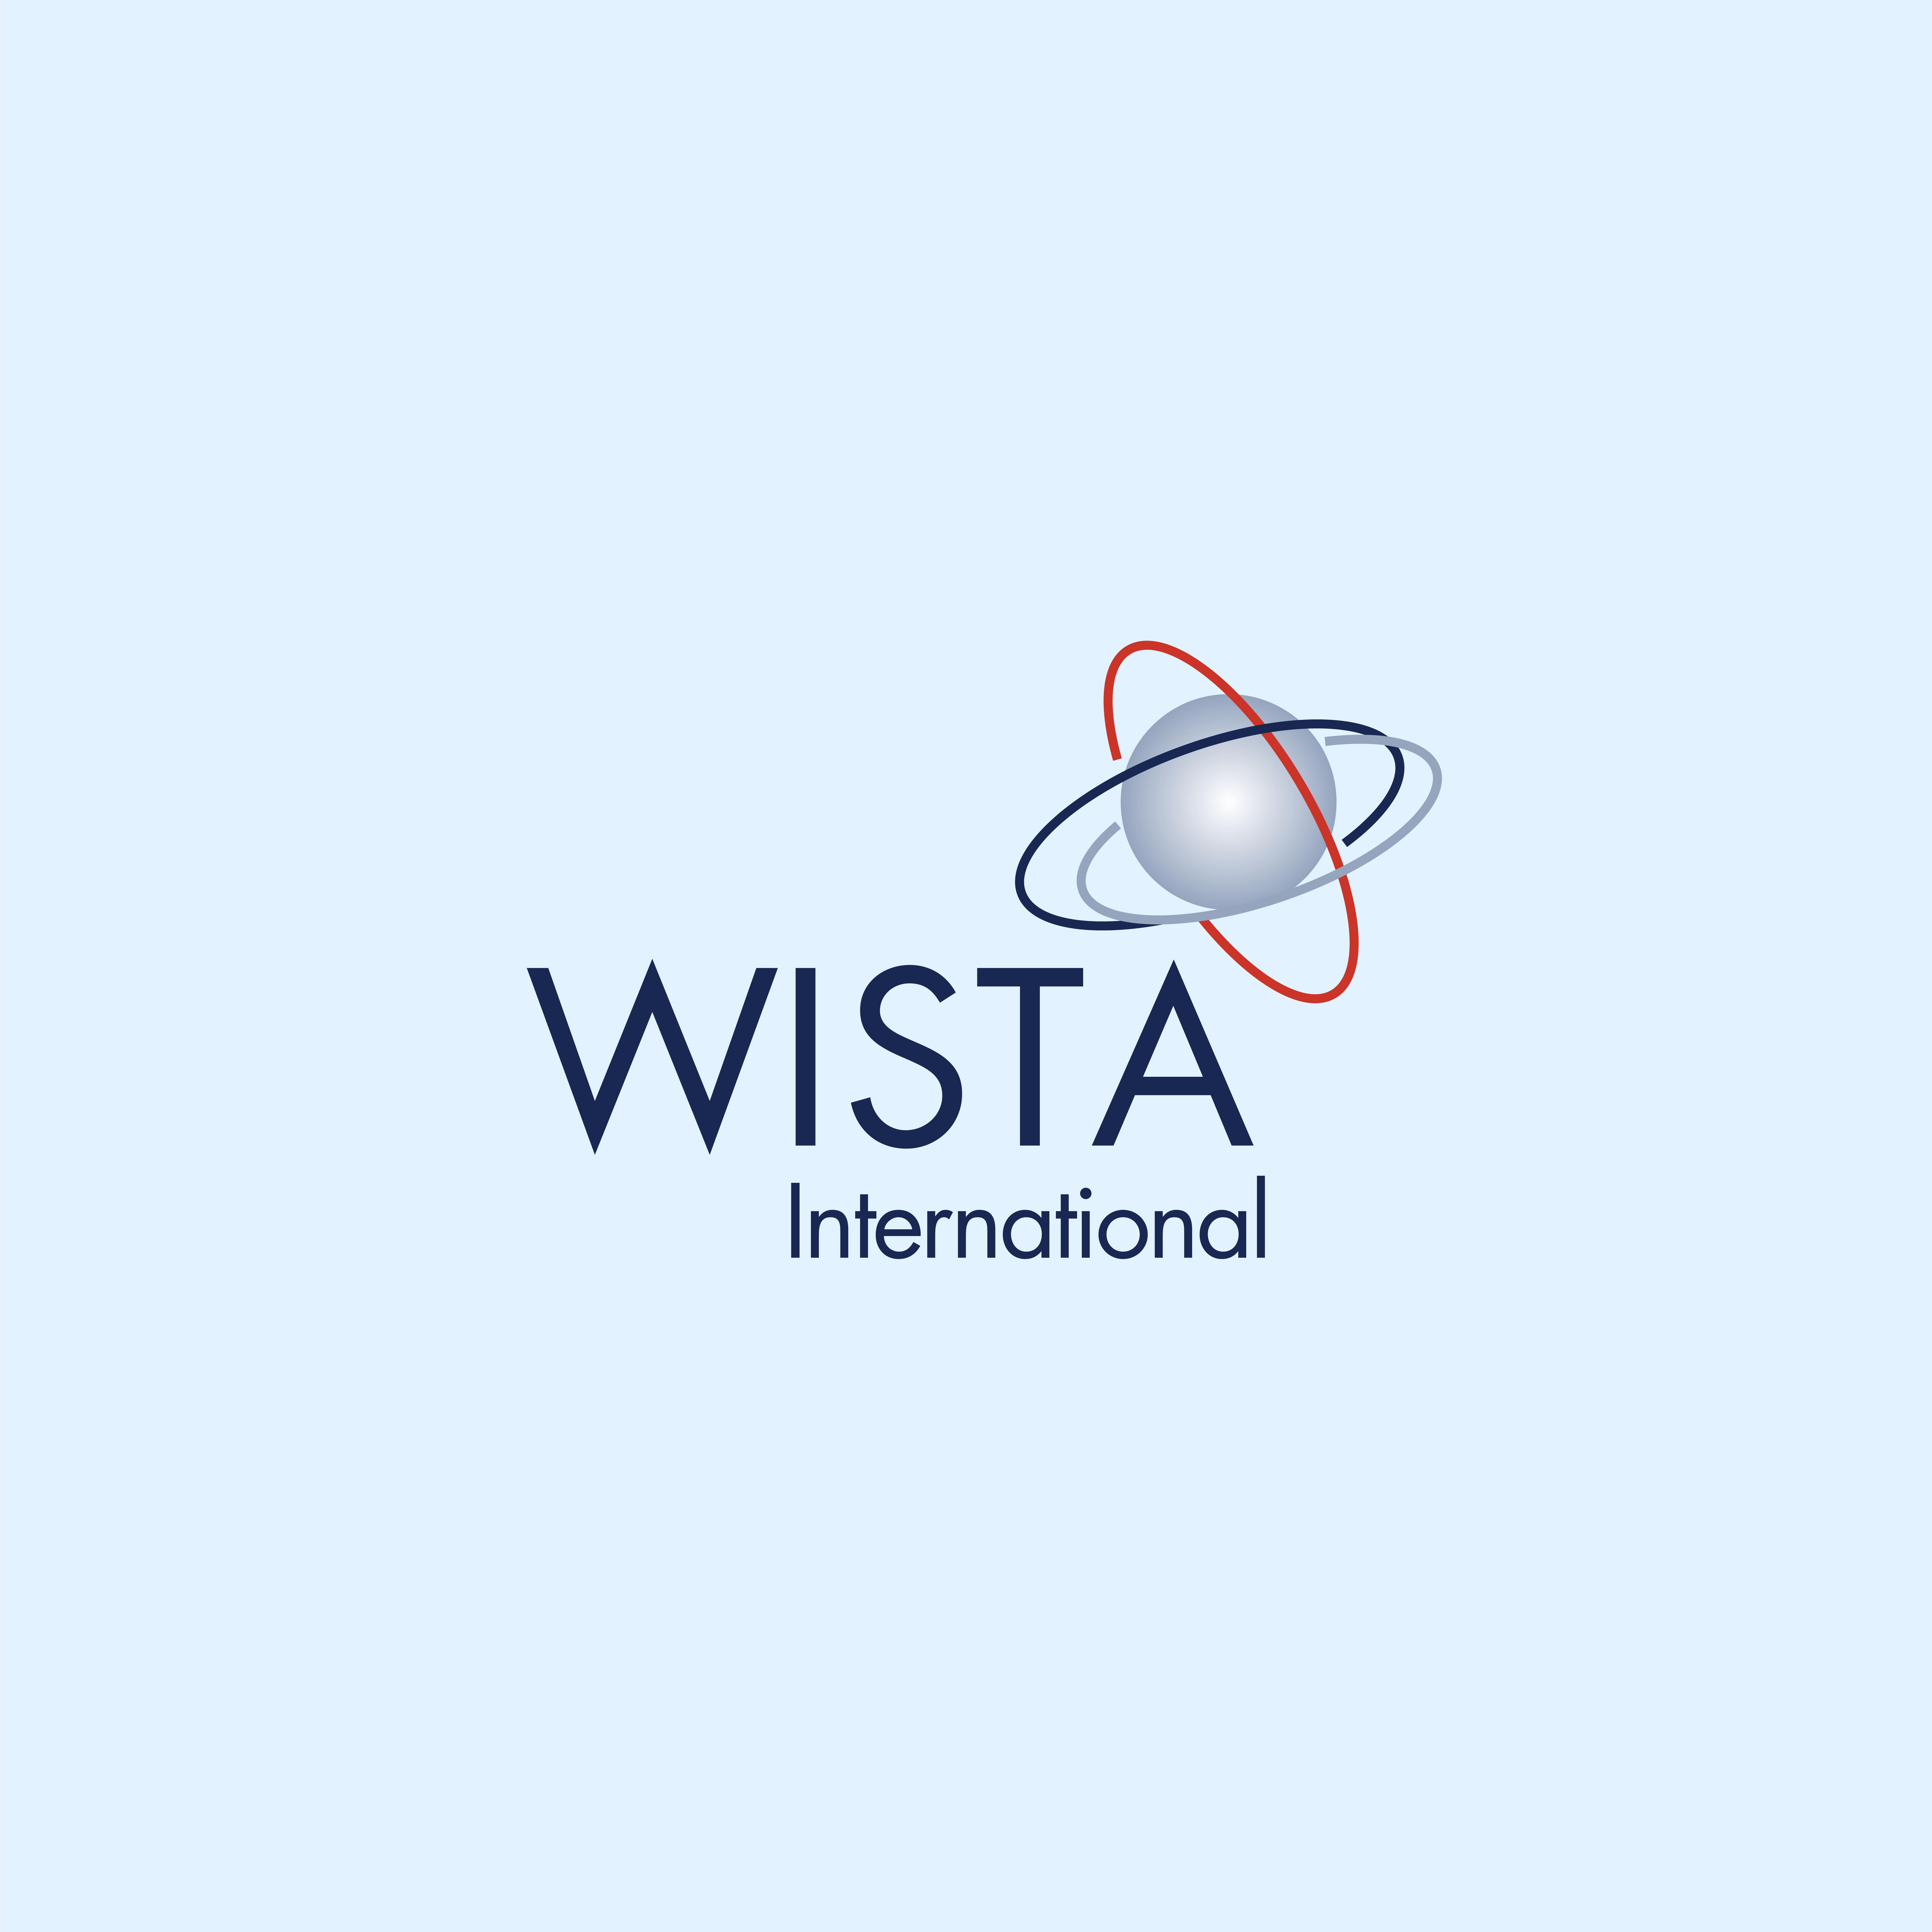 Wista international's logo in a grey-blue colour.